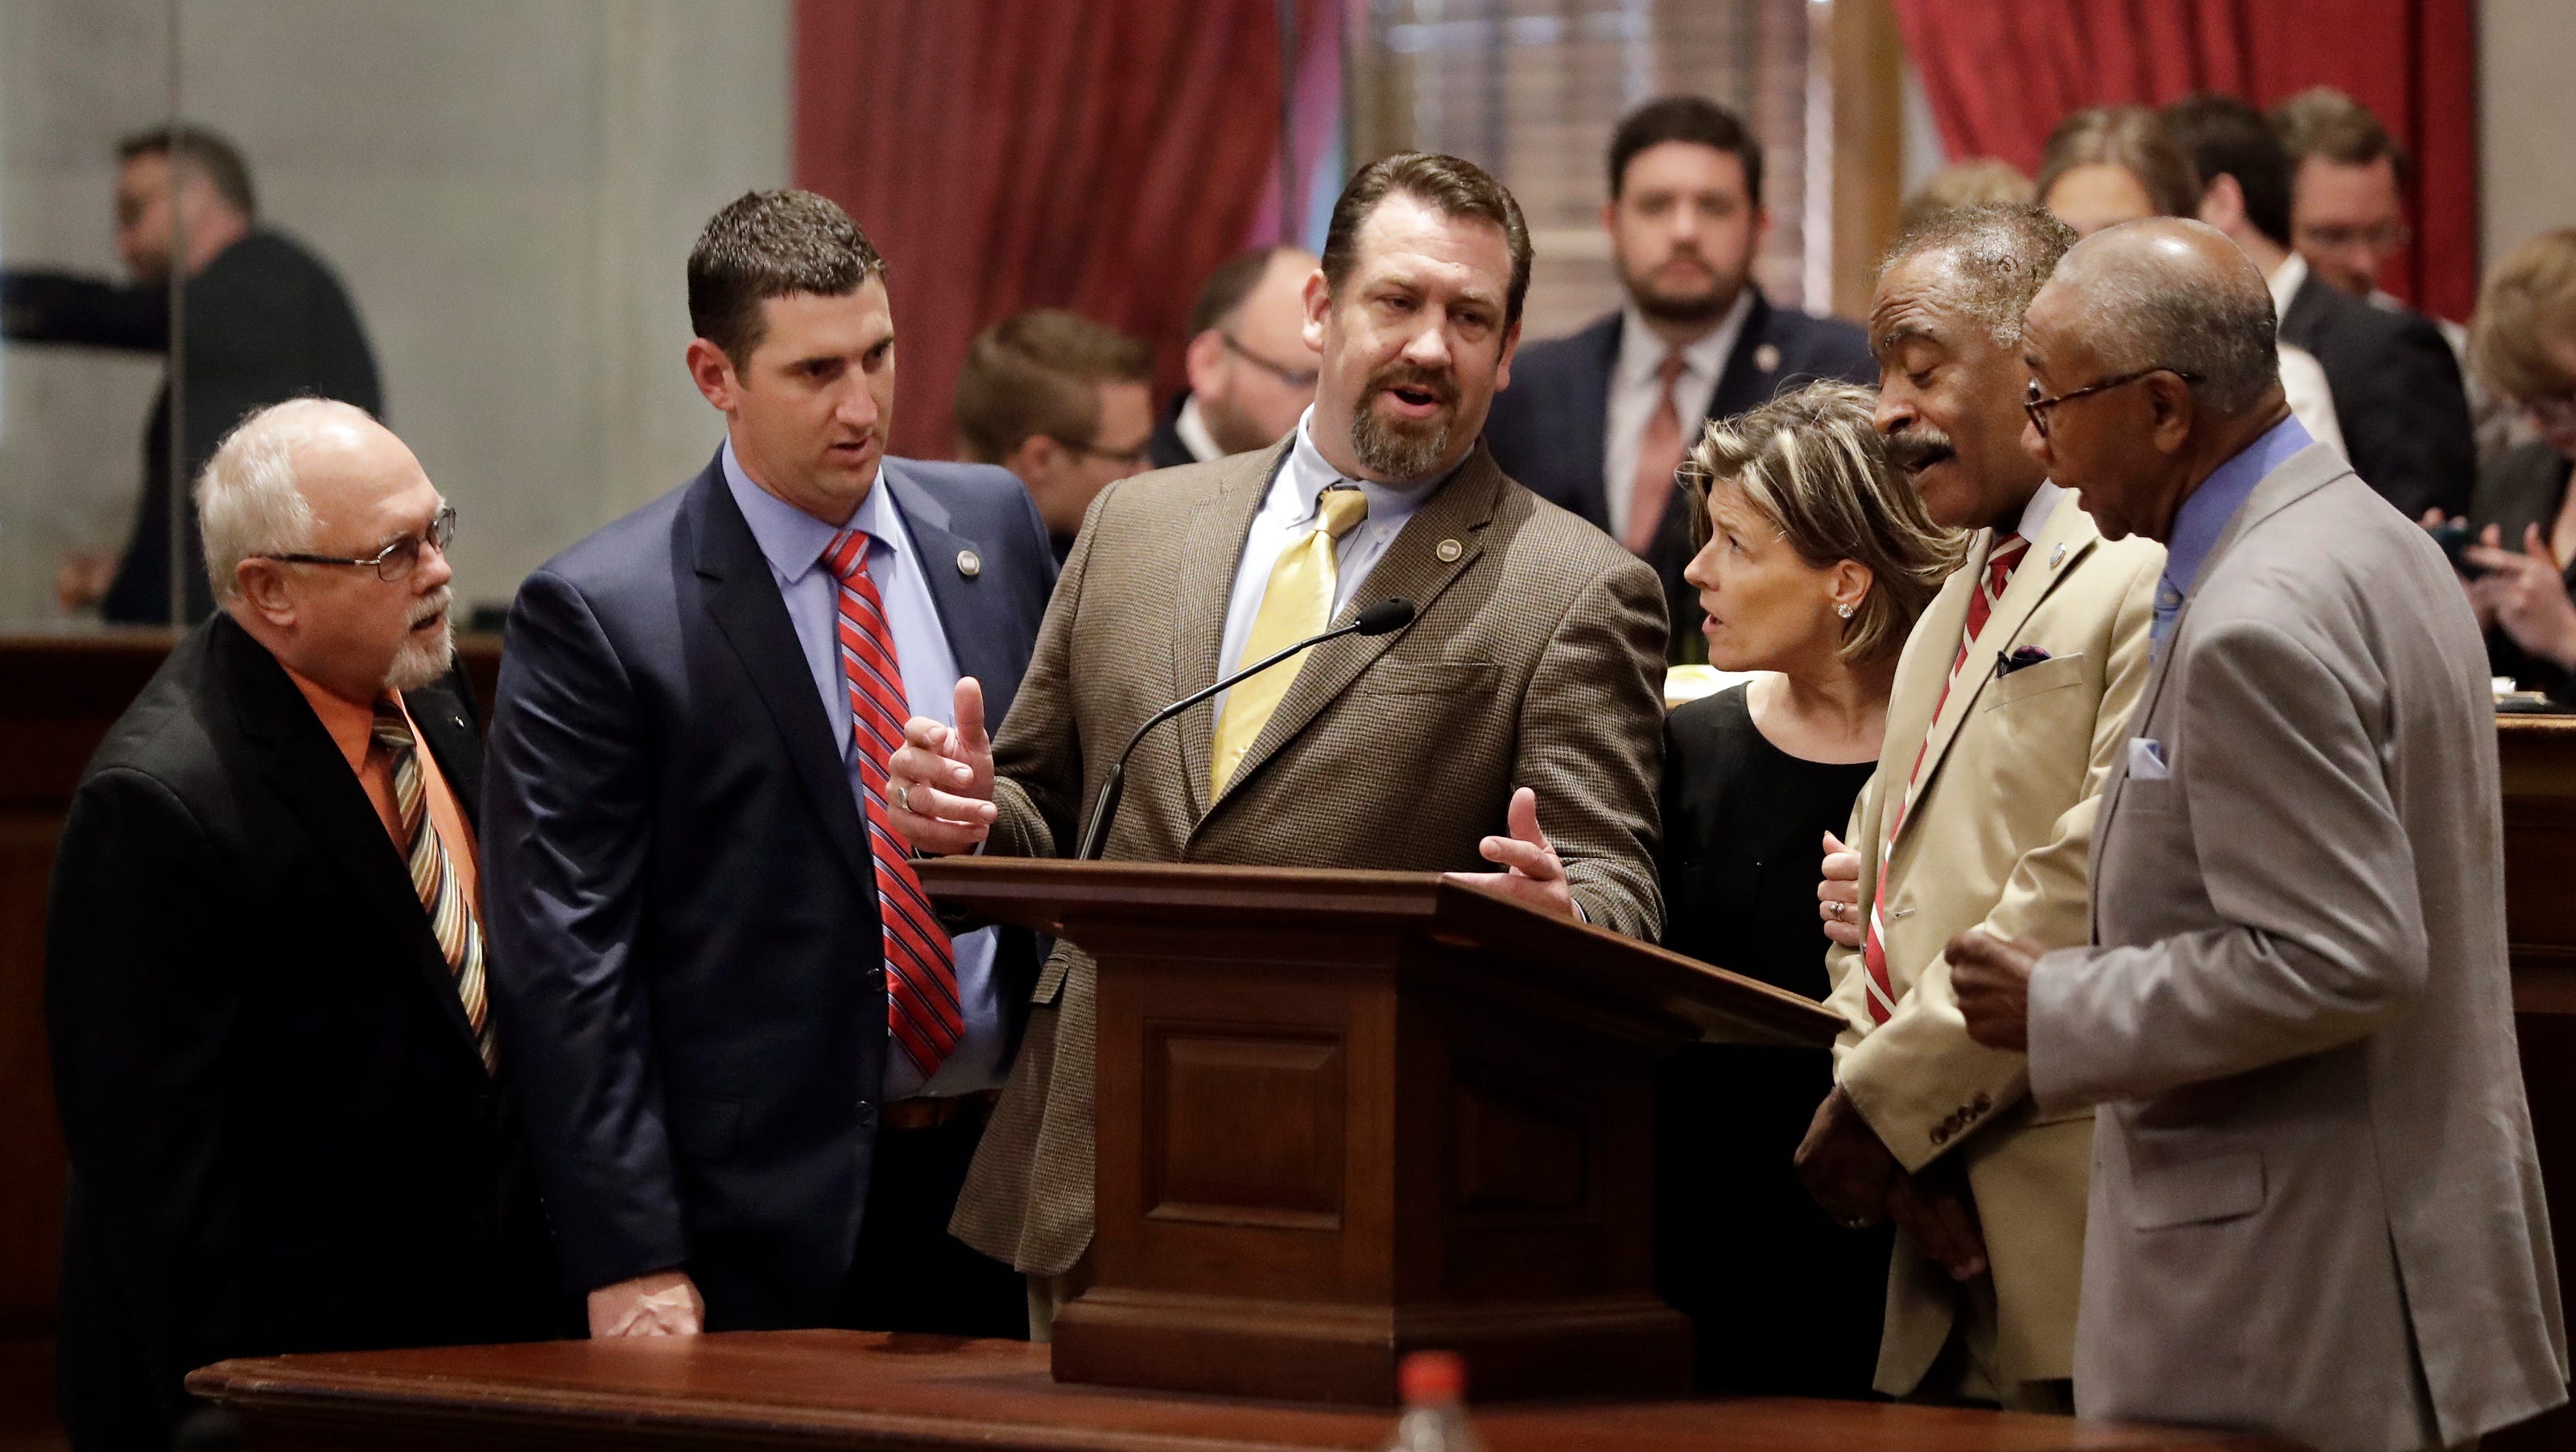 Tennessee legislature Chaos, Democratic walkout mark final hours of